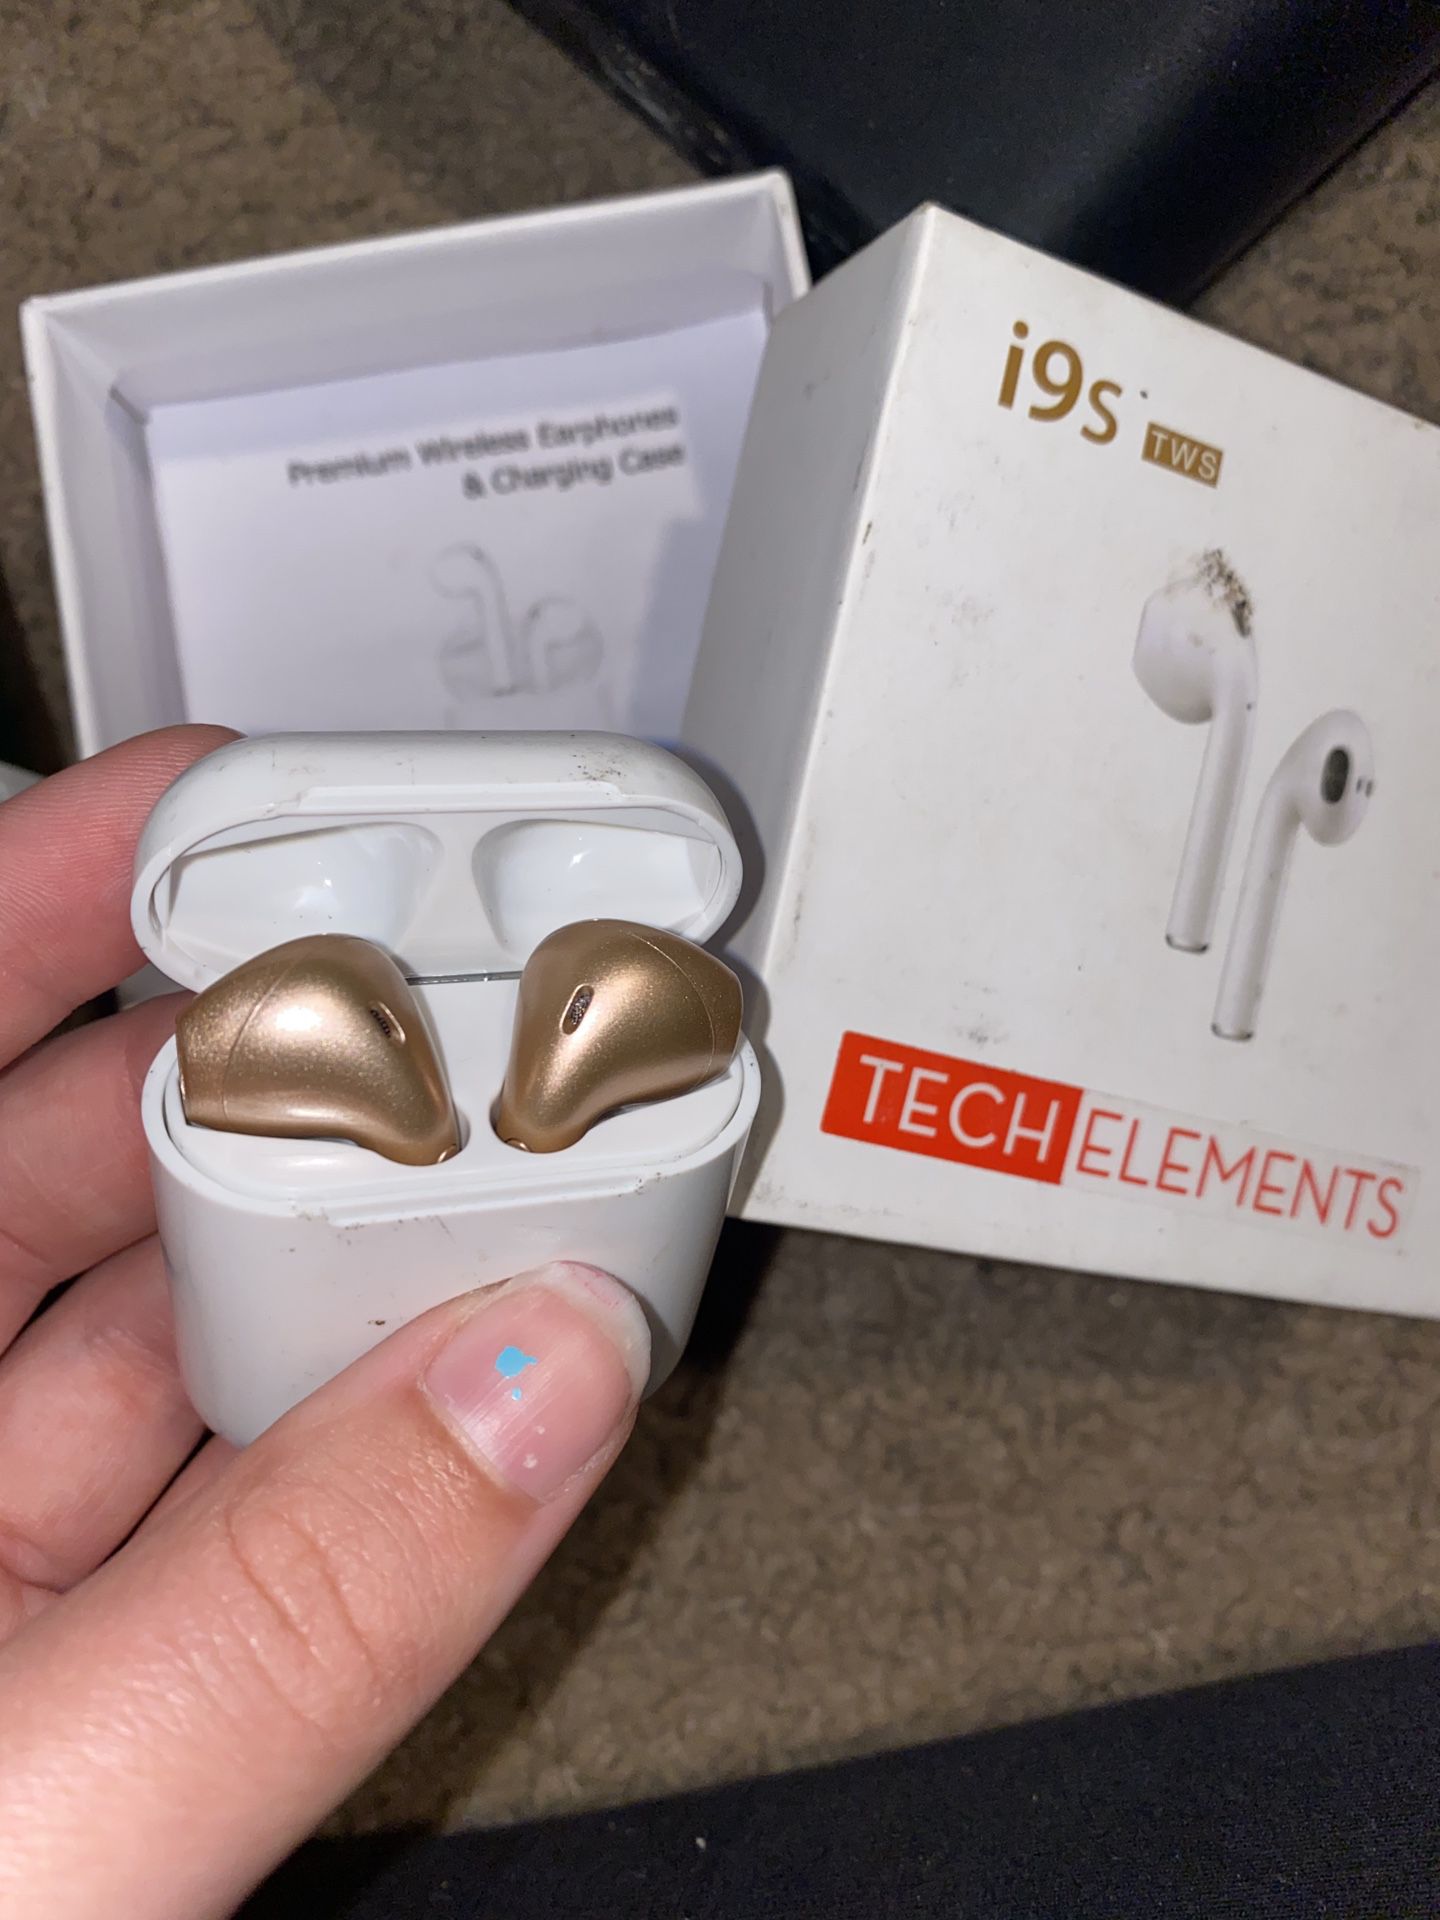 Bluetooth headphones and smart watch